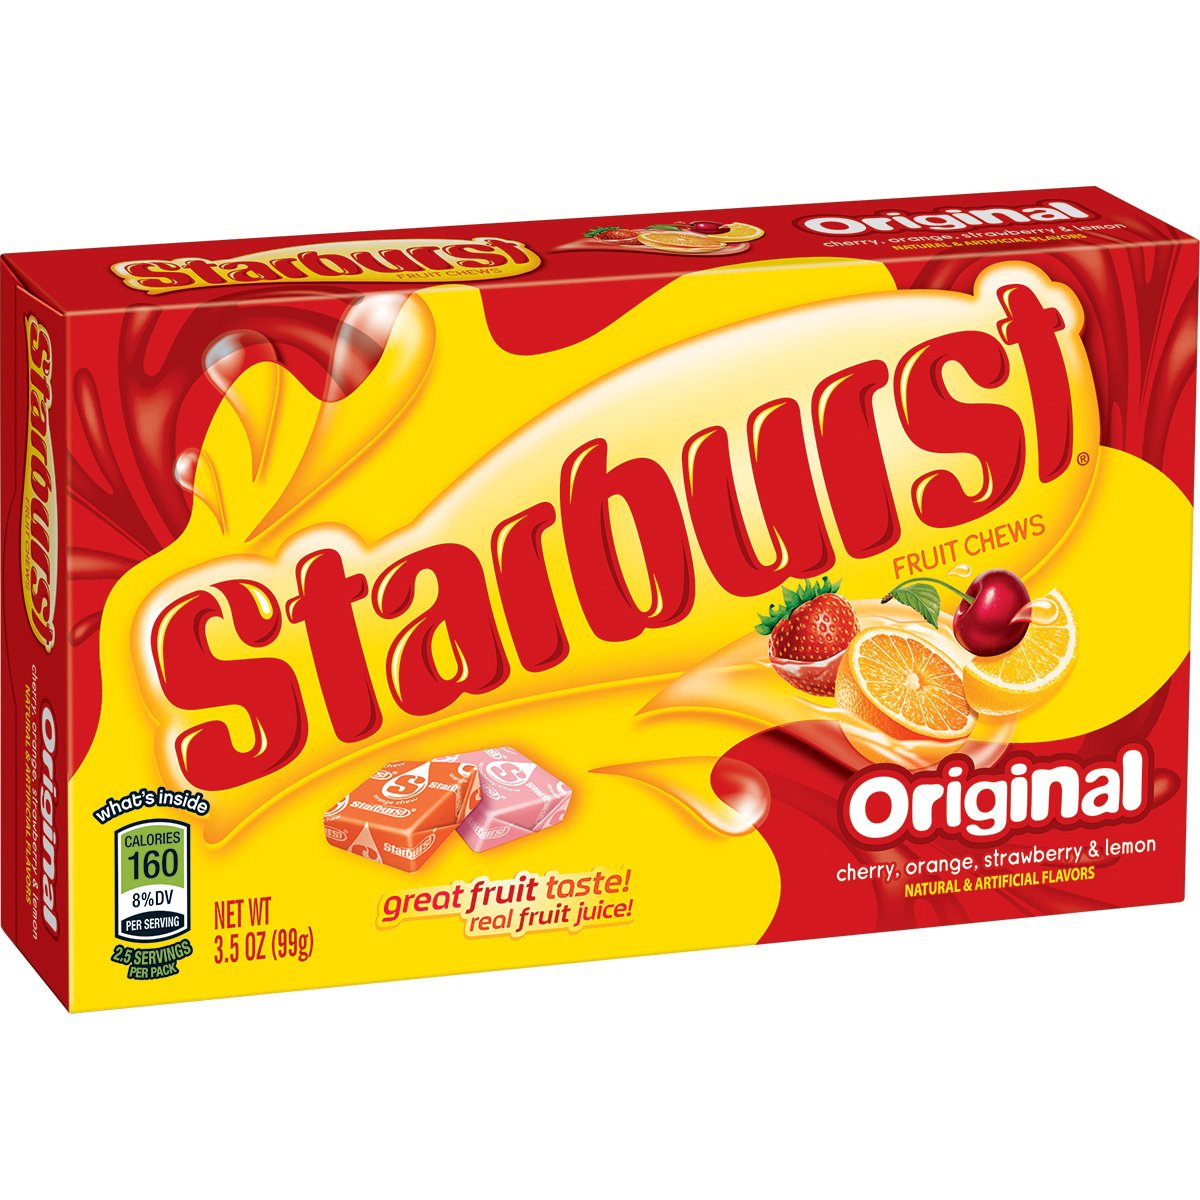 Starburst Original Fruit Chews Candy Theater Box, 3.5 oz